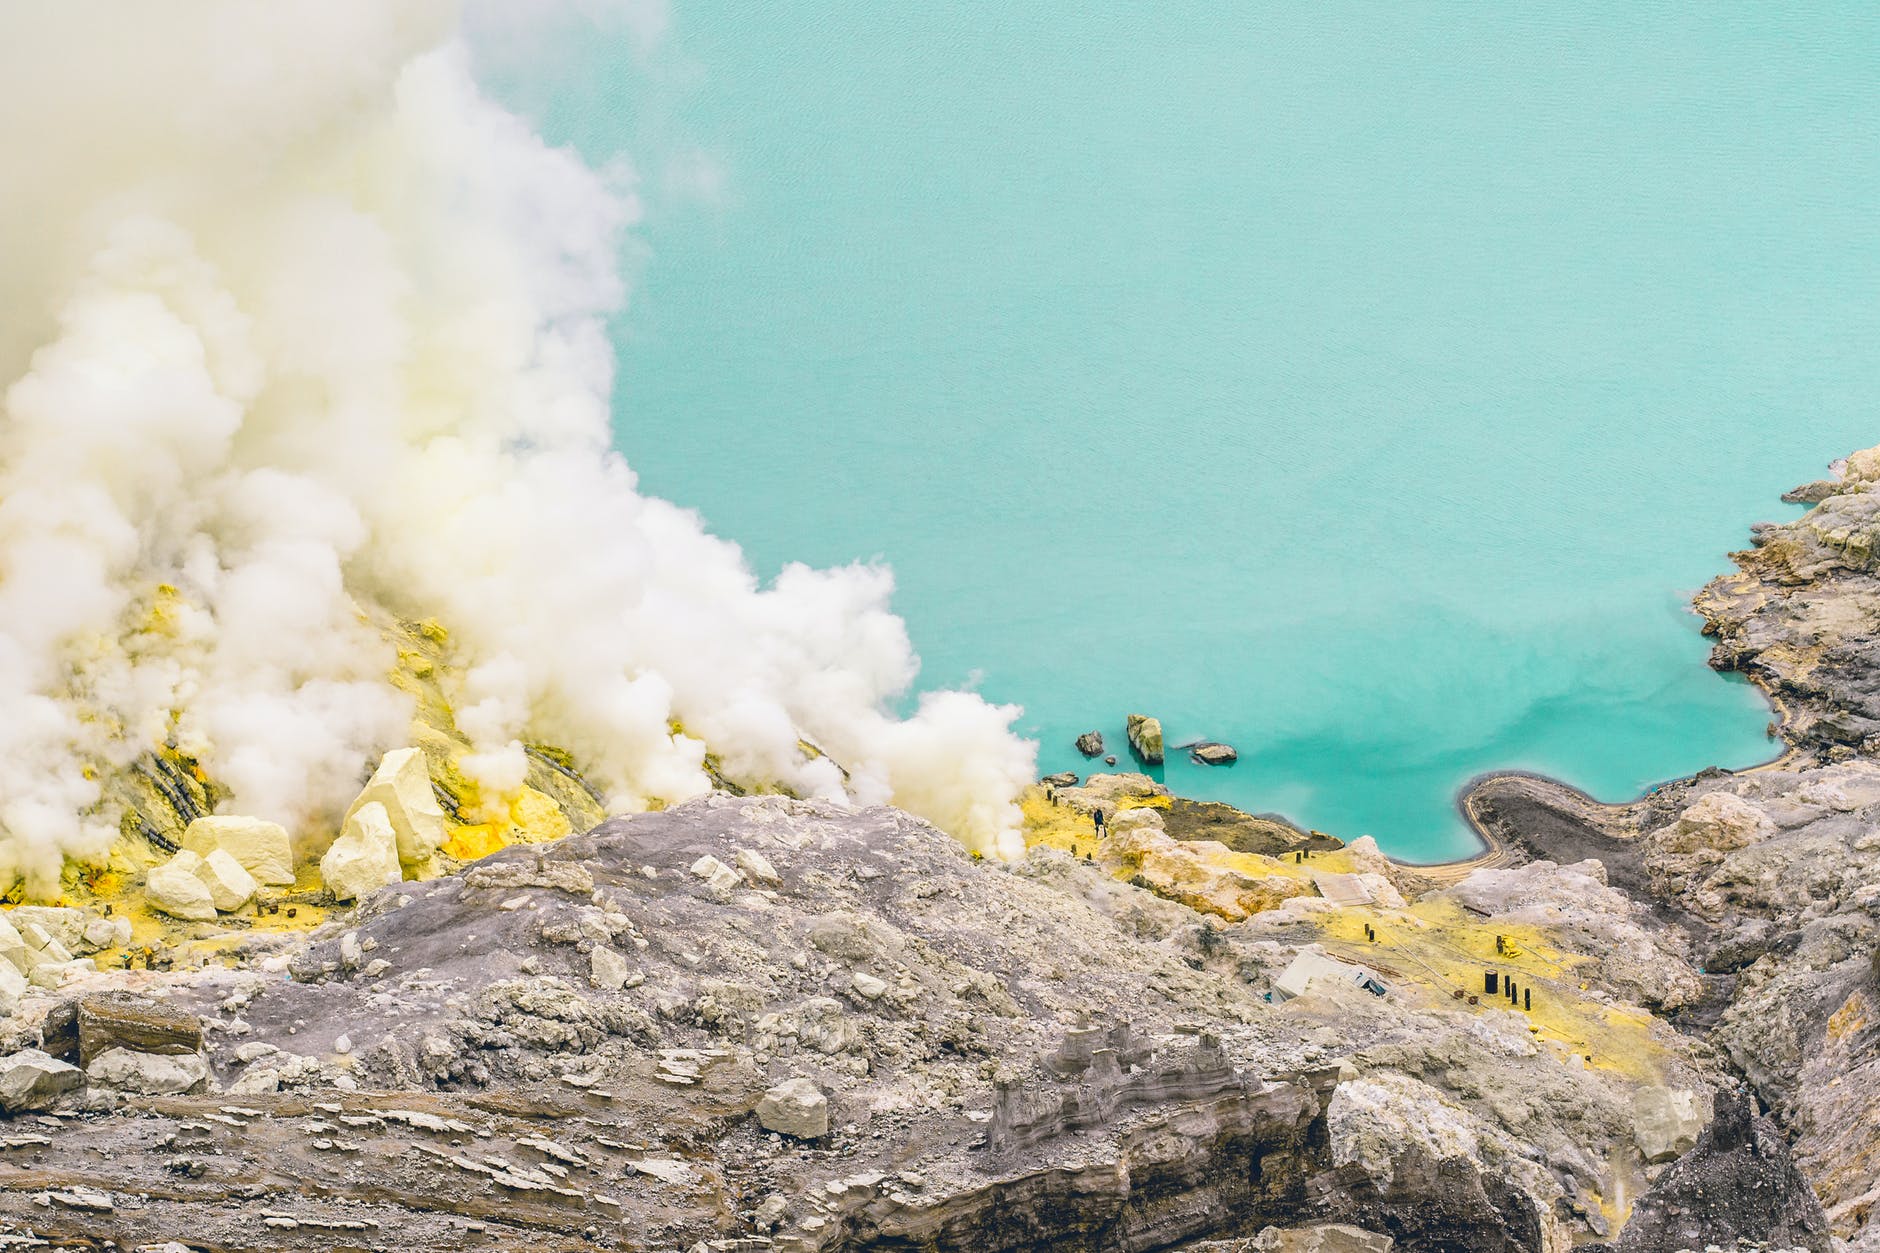 photo of kawah ijen volcano with sulfur mining in indonesia